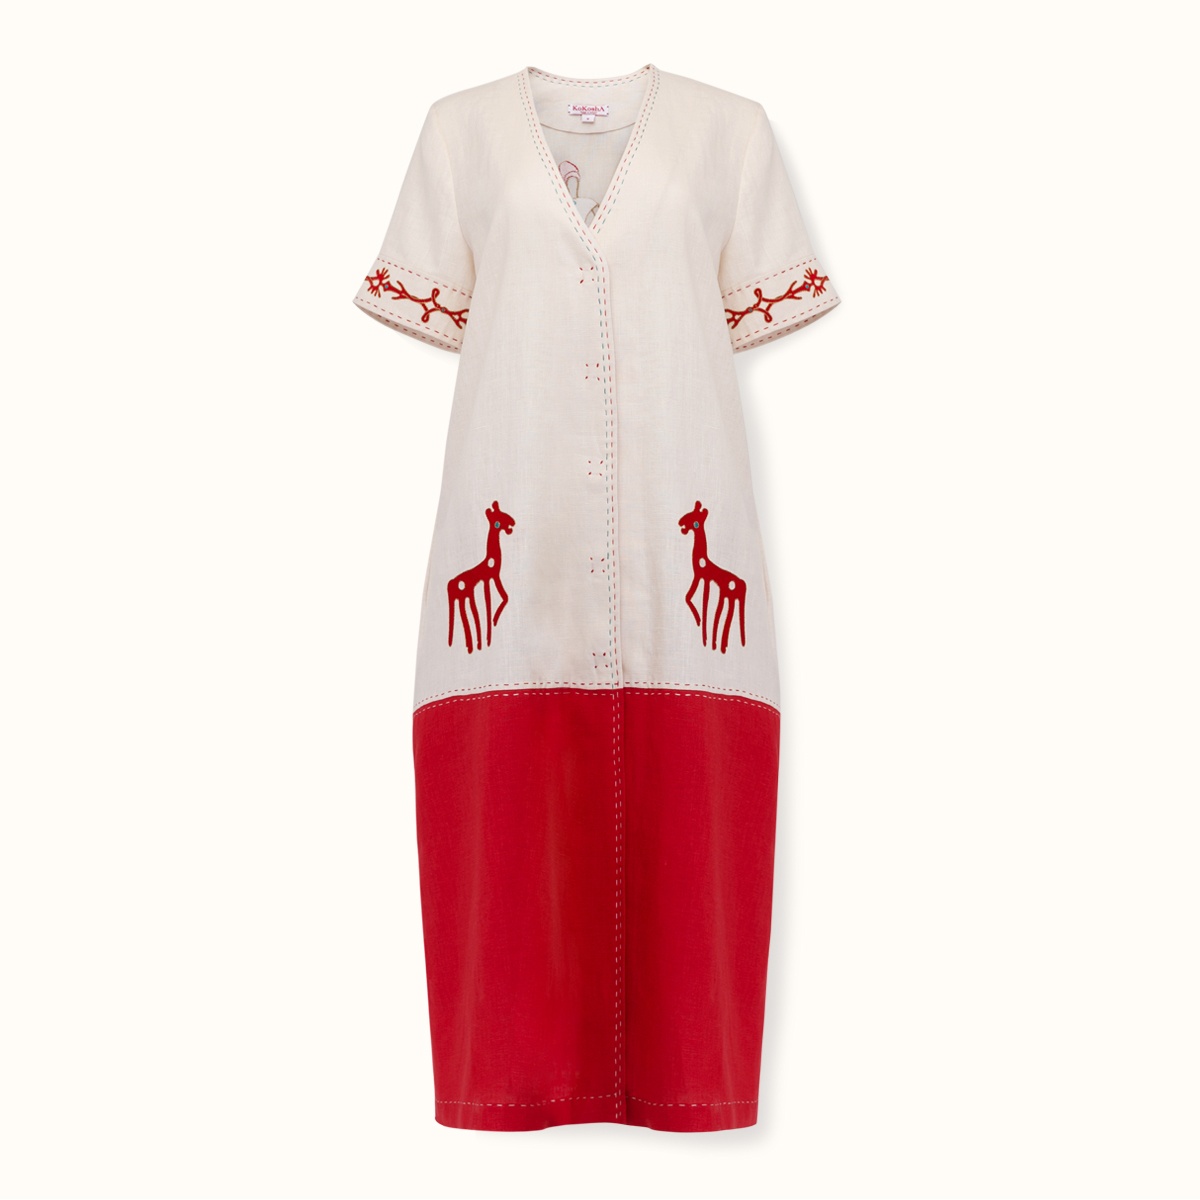 Dress "KAITAG" linen by Kokosha - Dresses